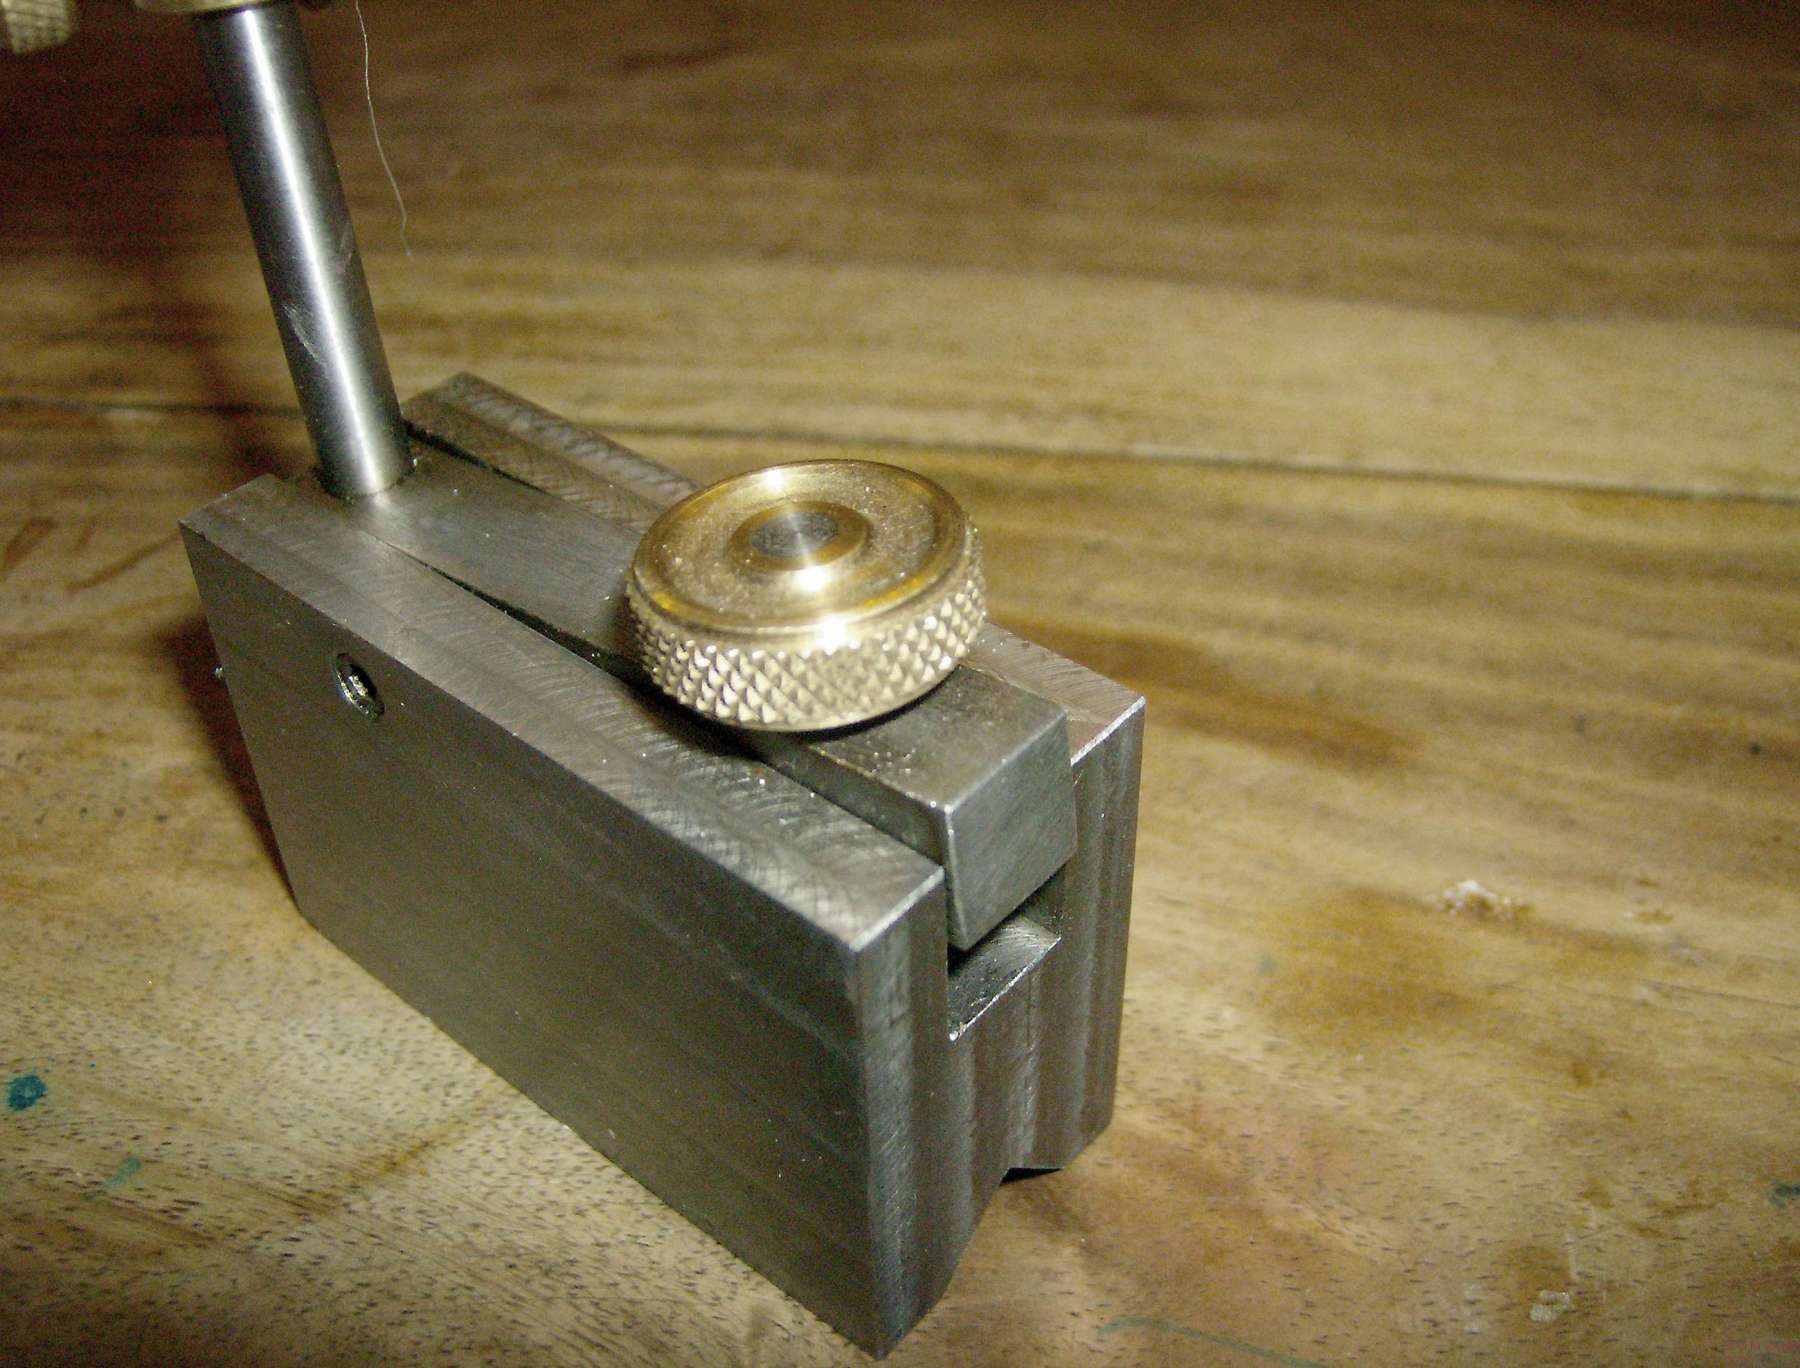 Adjusting screw with knurled nut